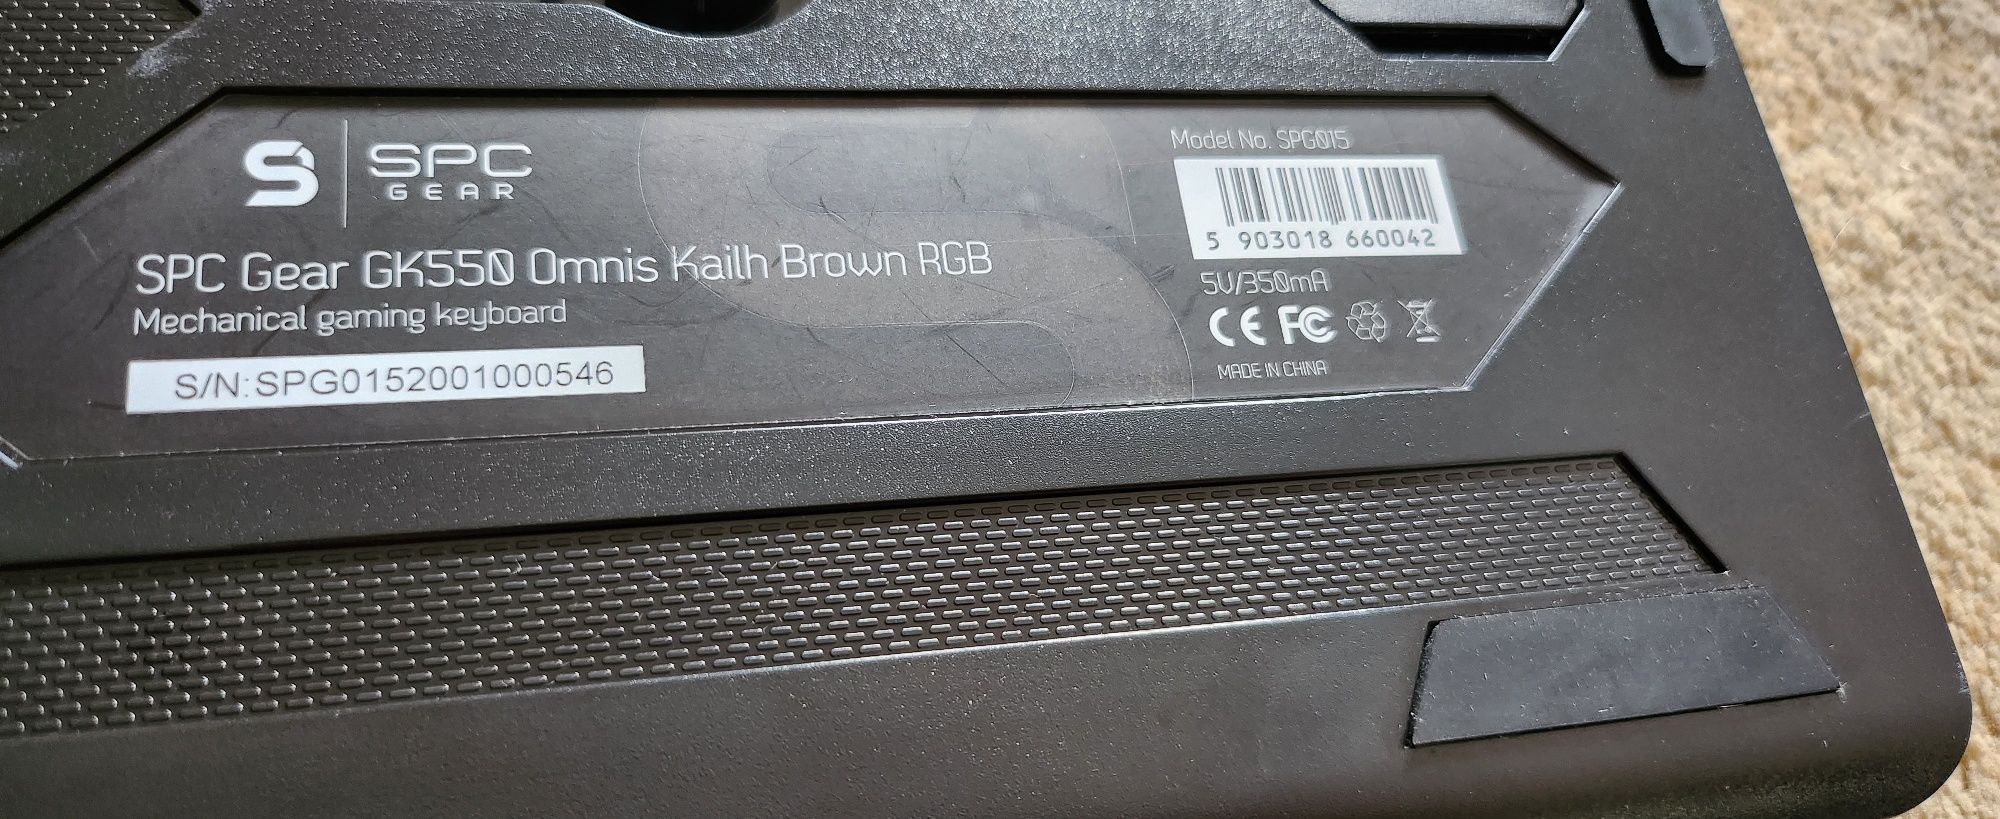 GK550 Omnis Kailh Brown RGB klawiatura mechaniczna